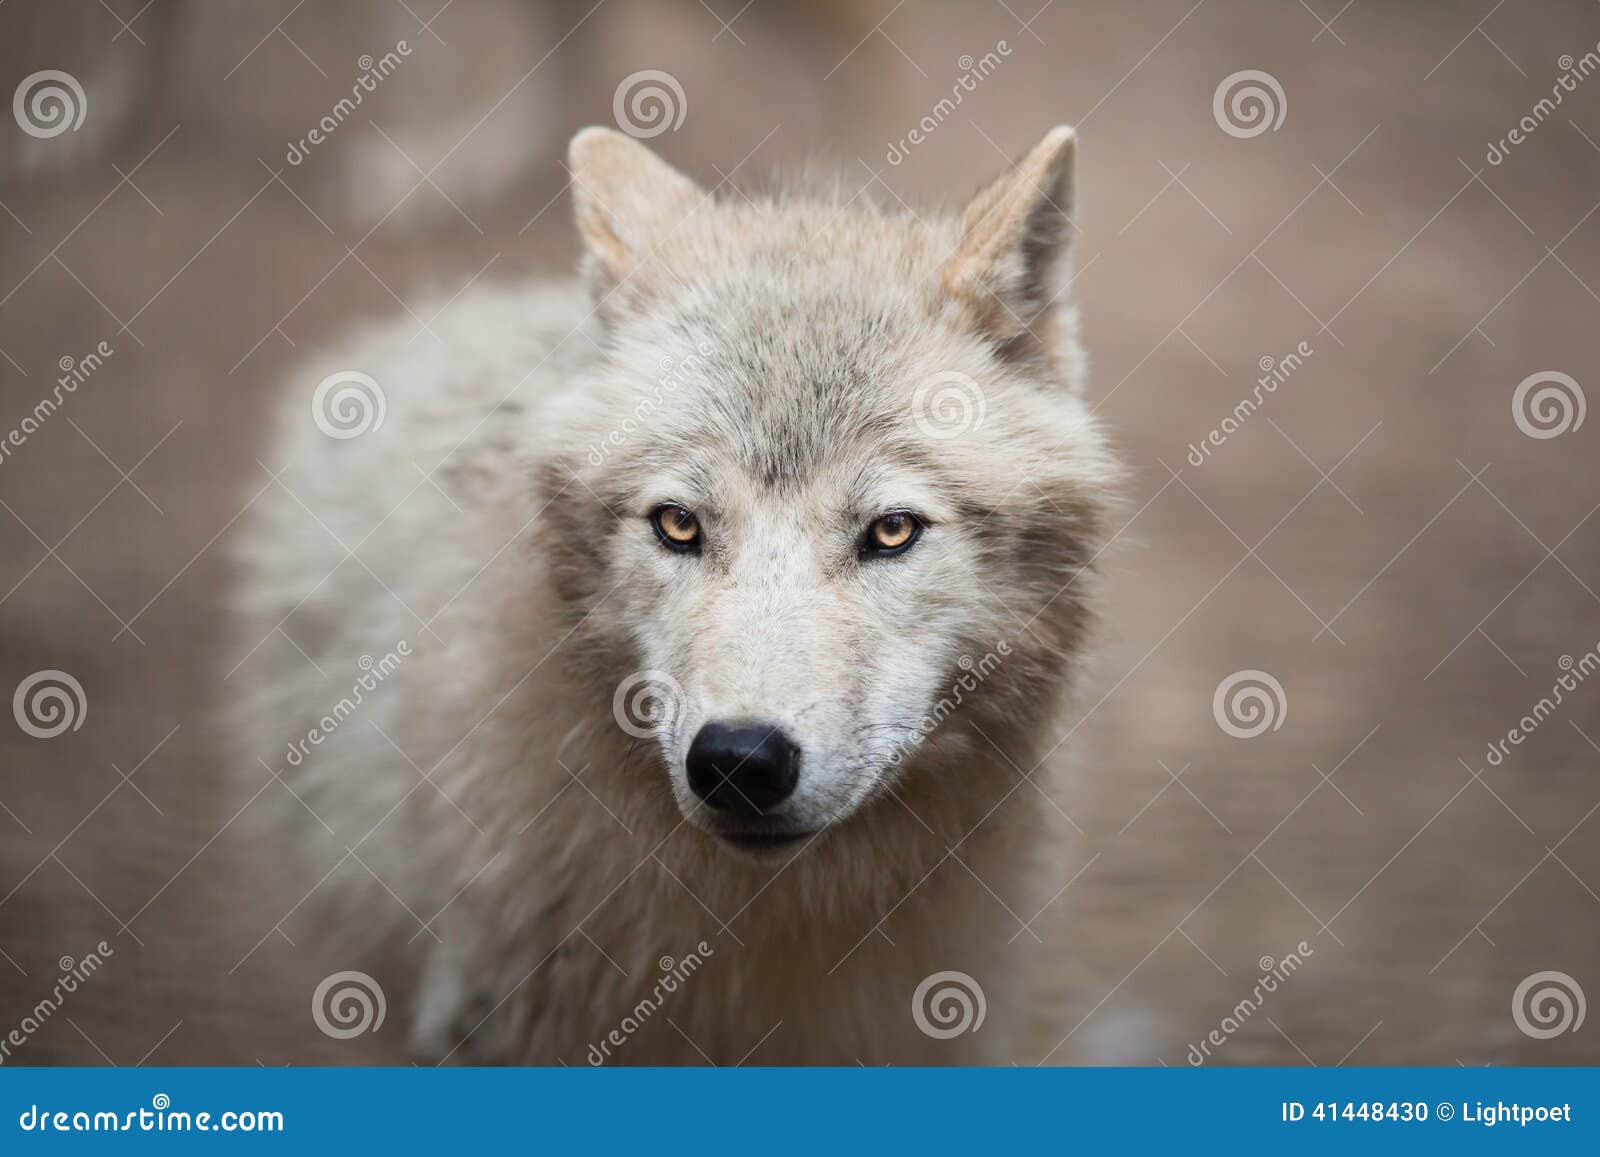 arctic wolf (canis lupus arctos) aka polar wolf or white wolf